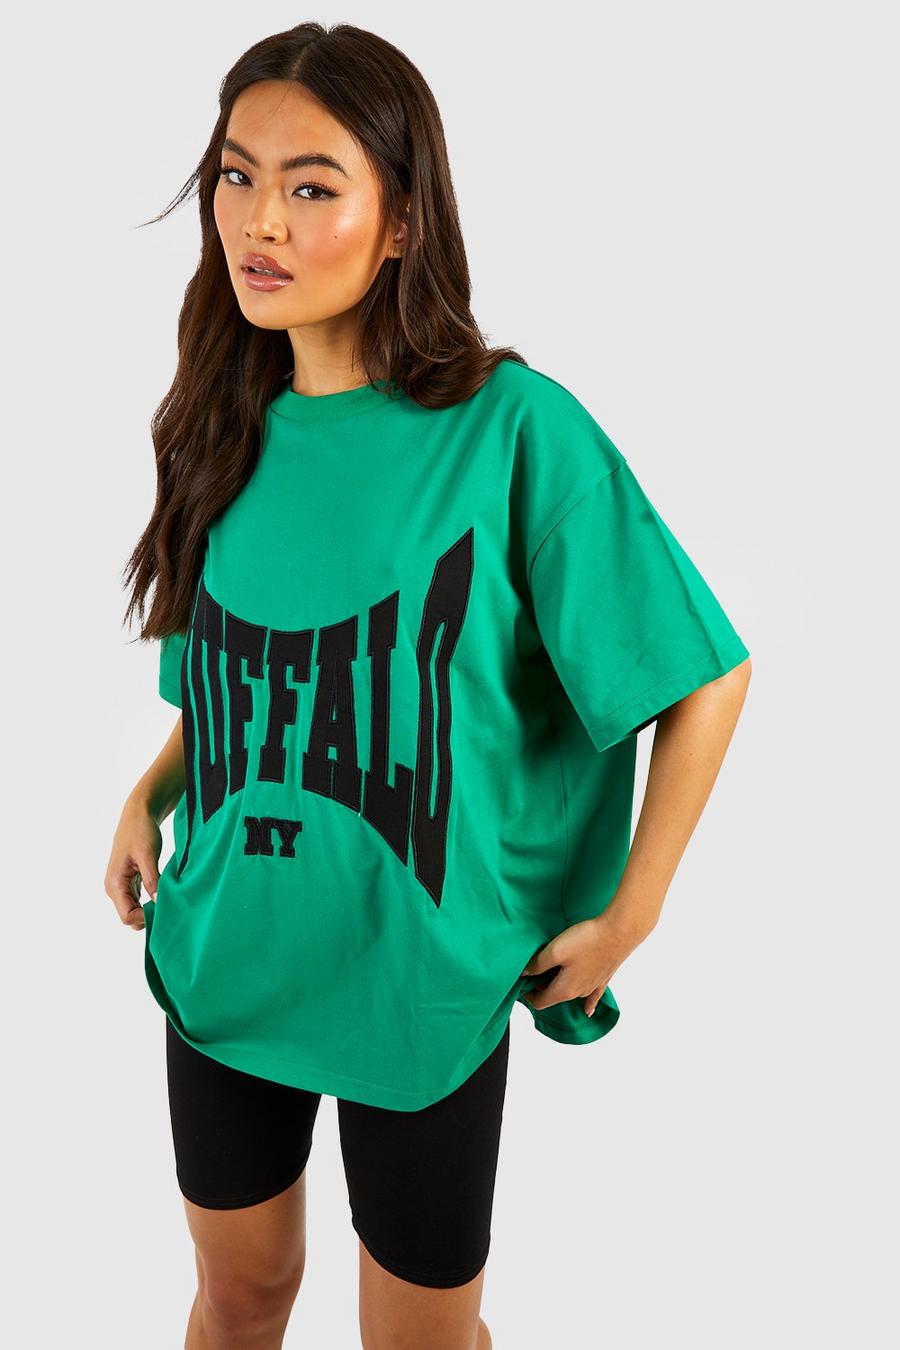 Green Printed Baggy Shirt for women - LASTINCH for Women - LASTINCH